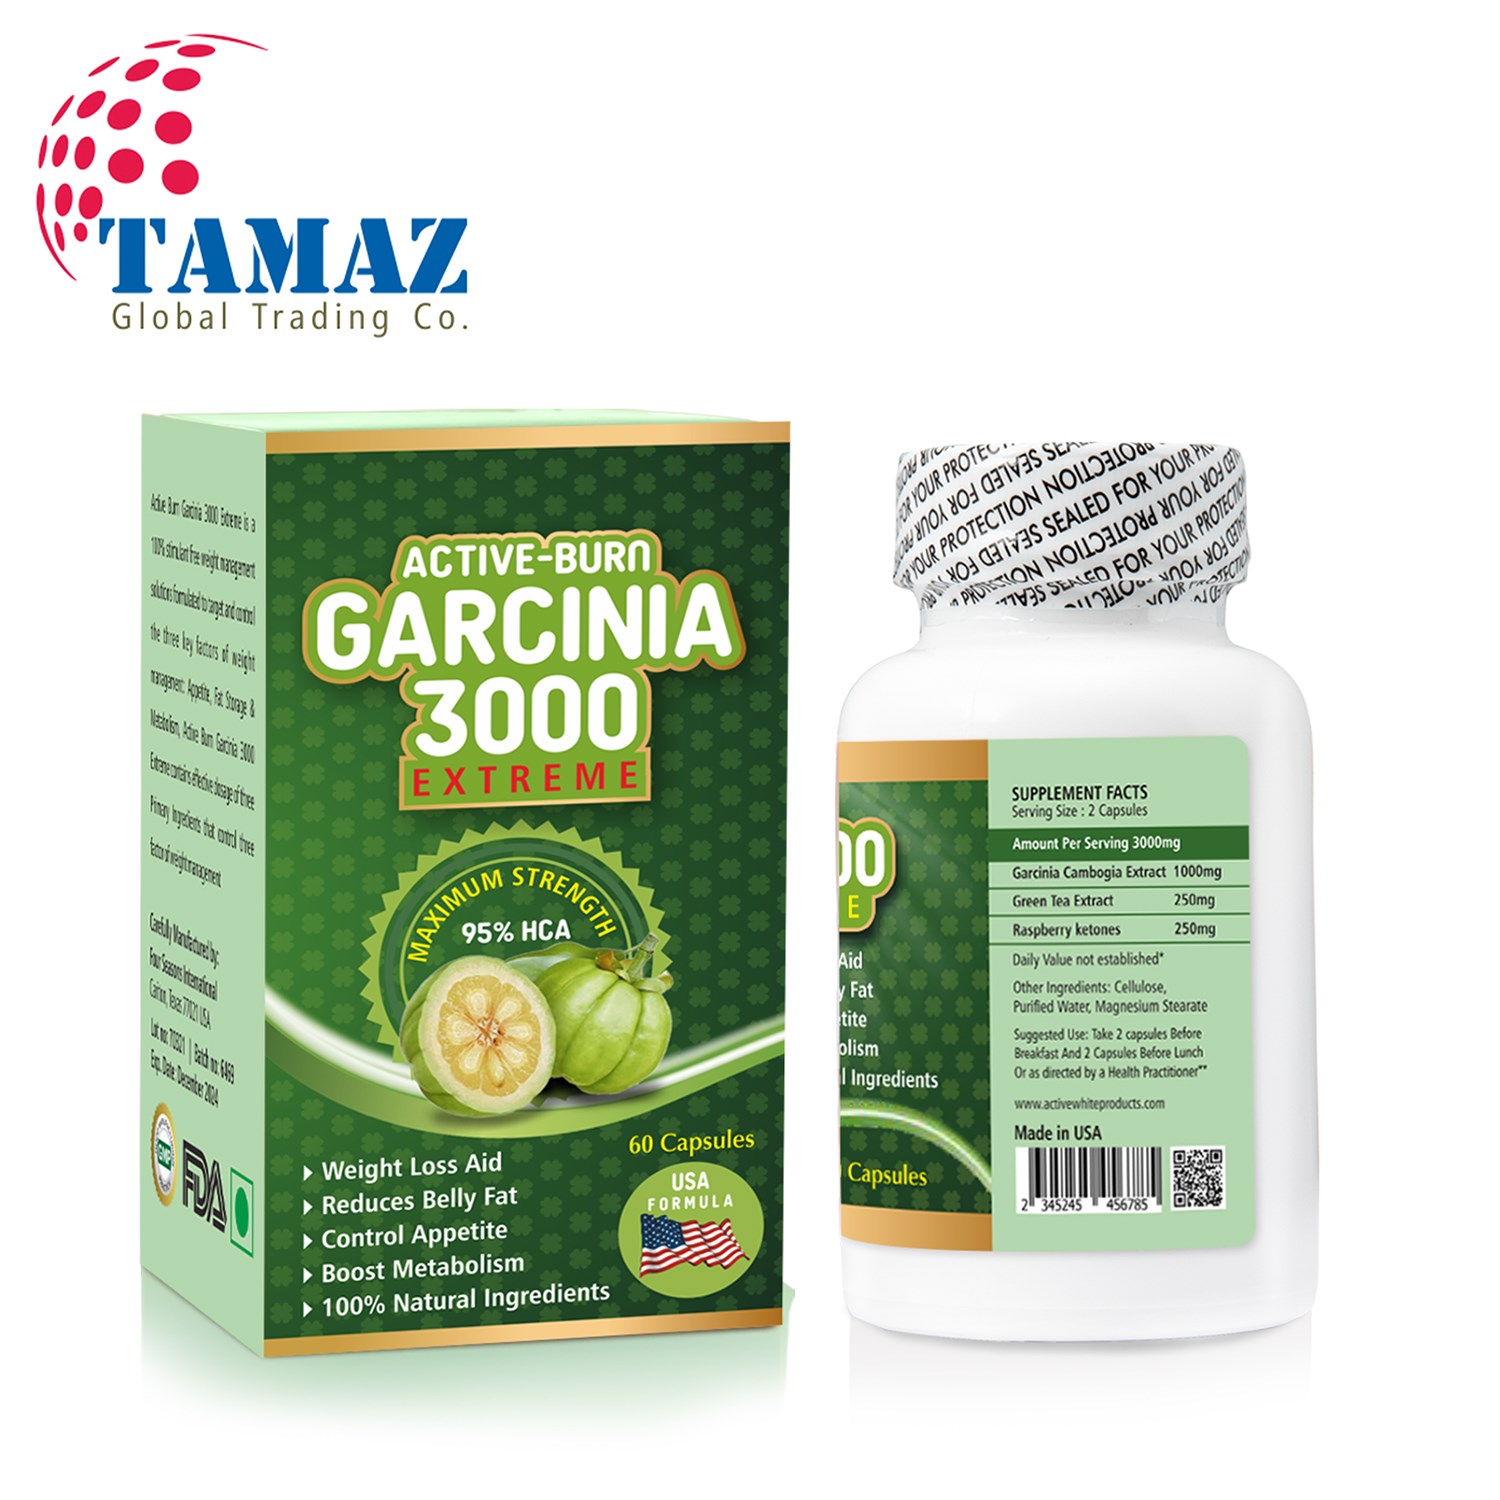 active burn garcinia 3000 extreme weight loss pills